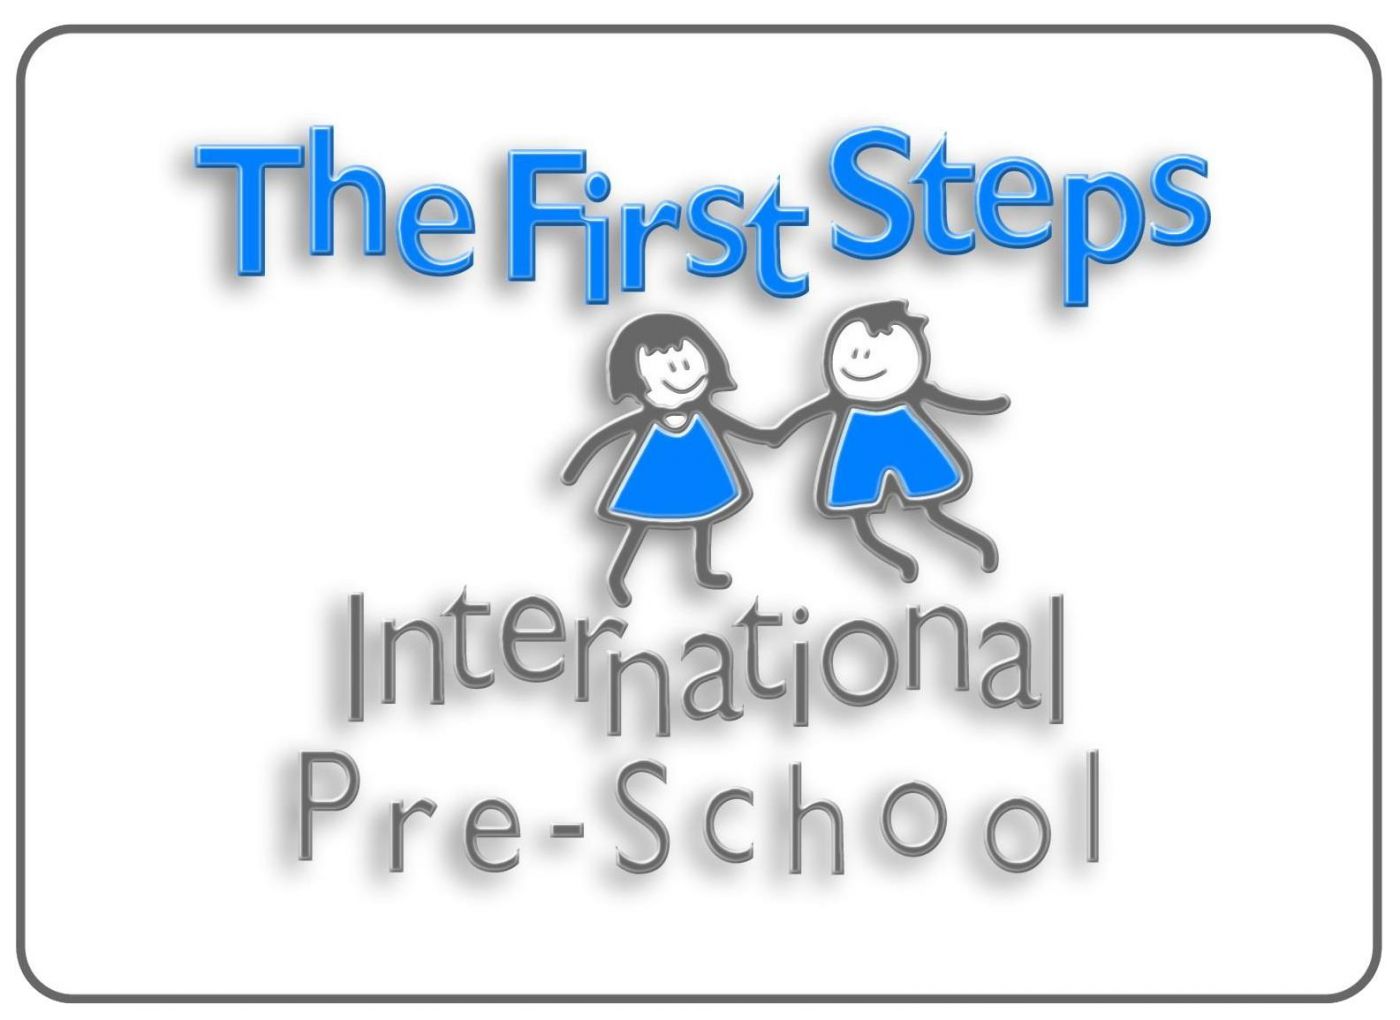 The First Steps International Preschool and International Preschool in Thailand